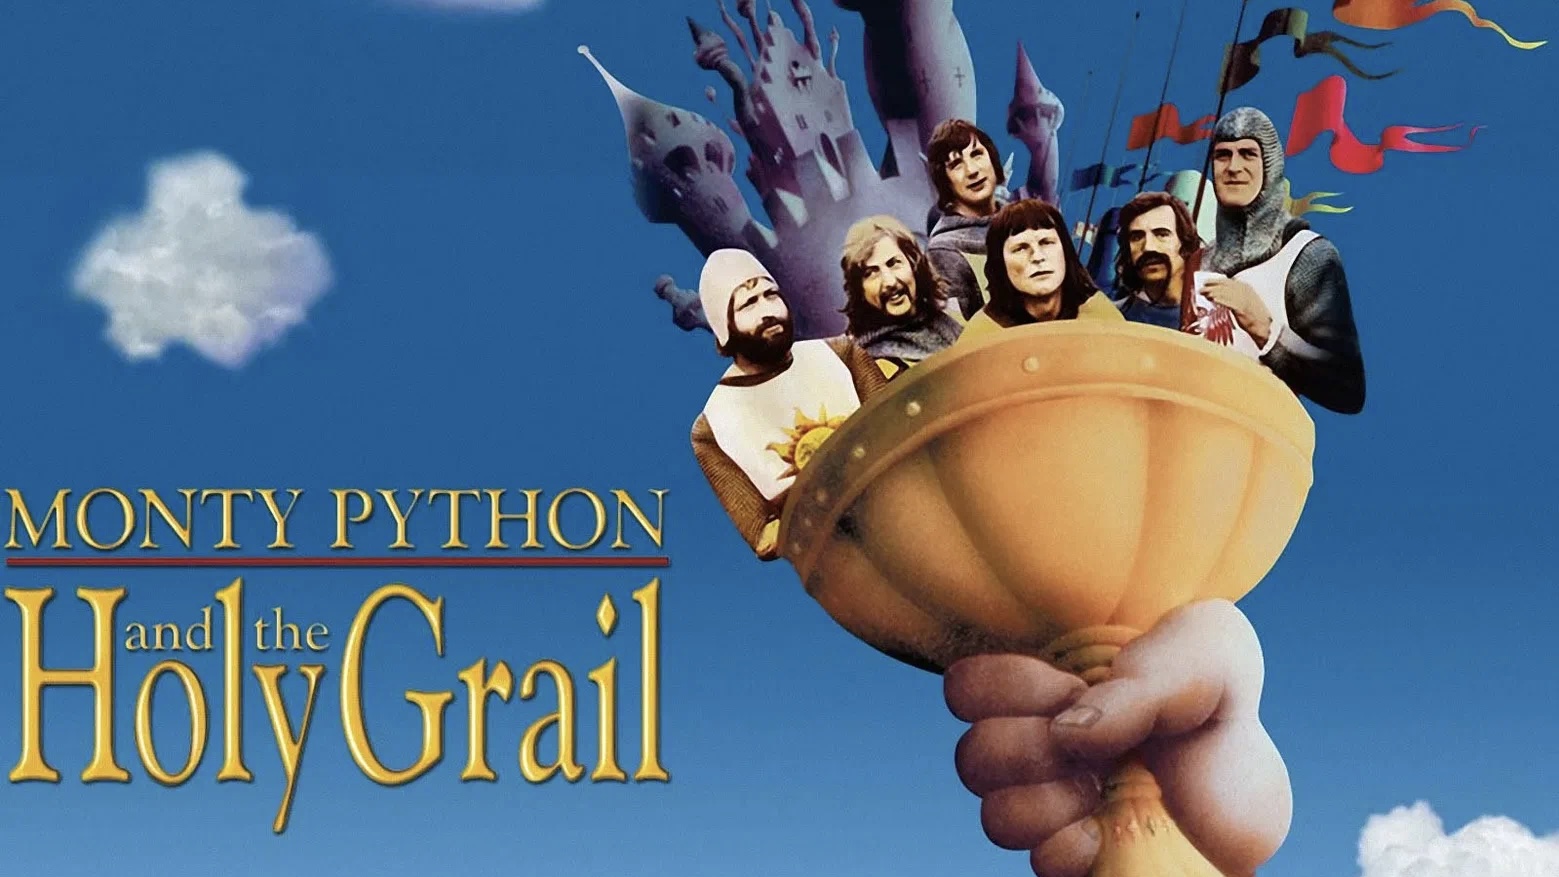 Монти Пайтон и Священный Грааль | Monty Python and the Holy Grail (1975)